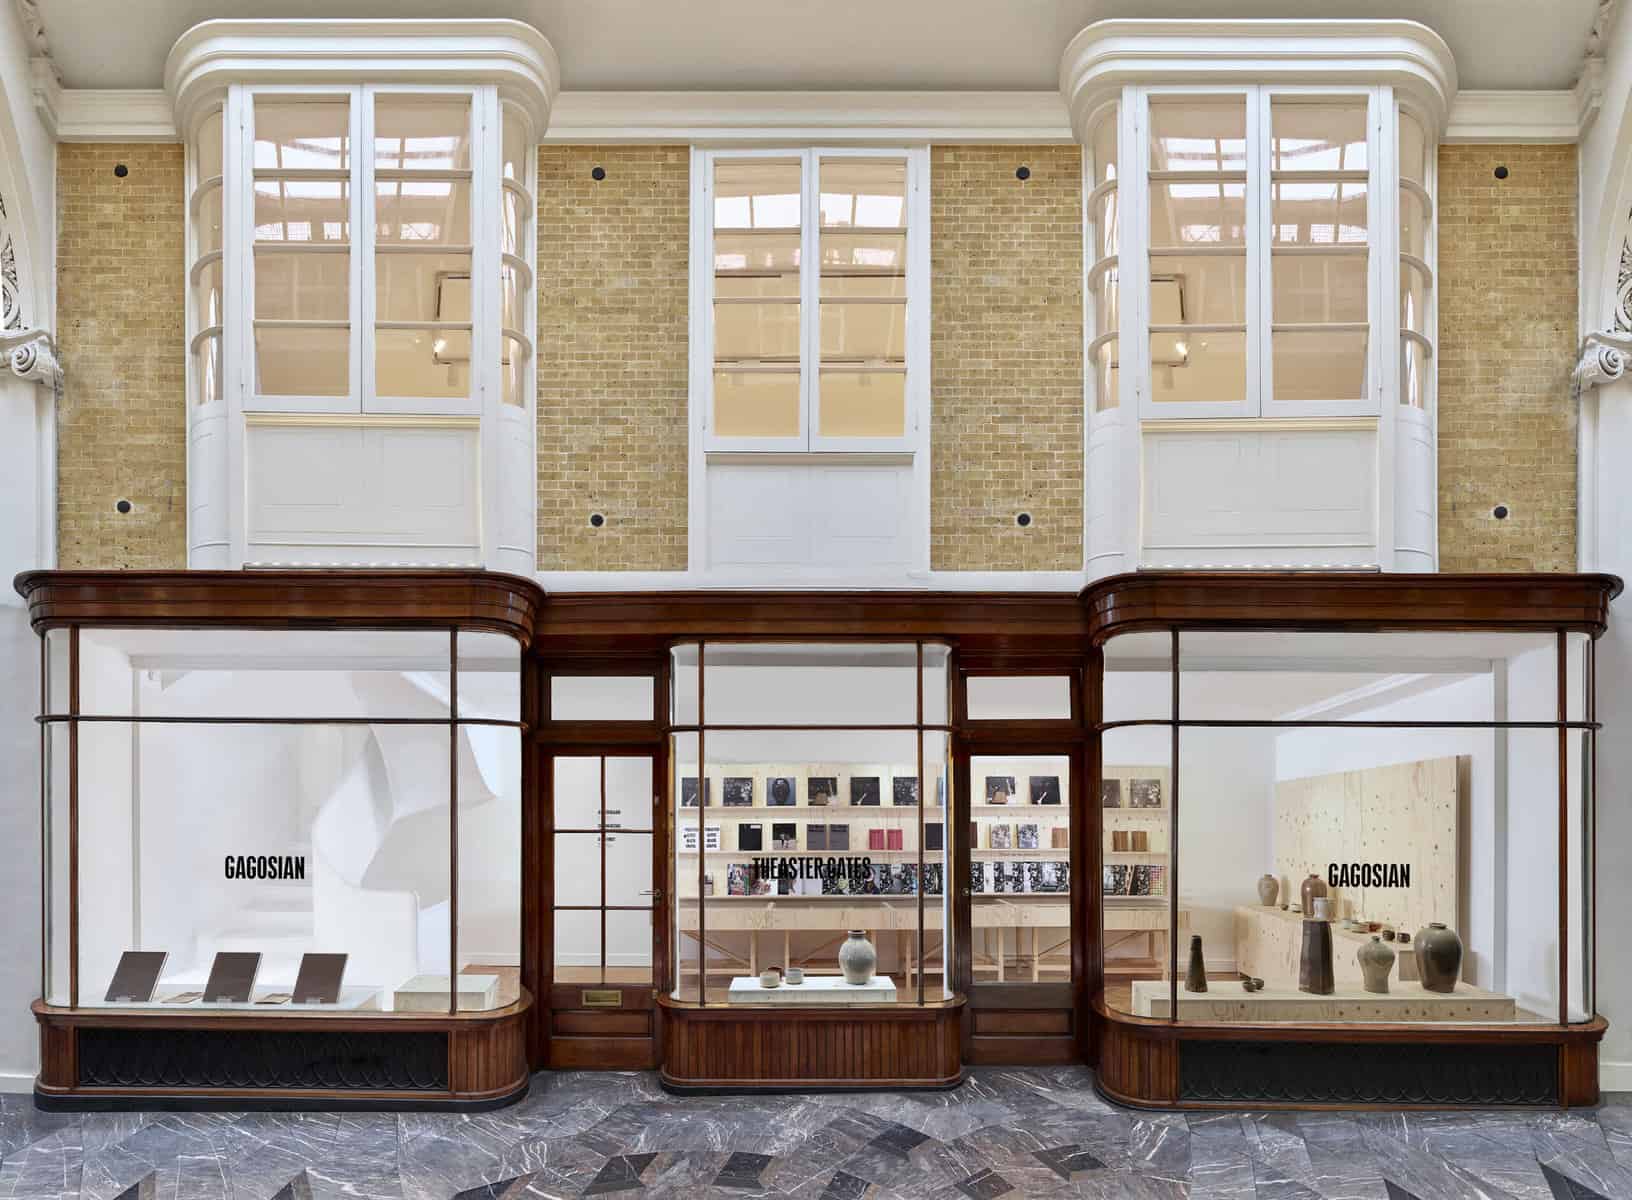 Designer Marc Newson Has Taken Over the Gagosian Shop in London